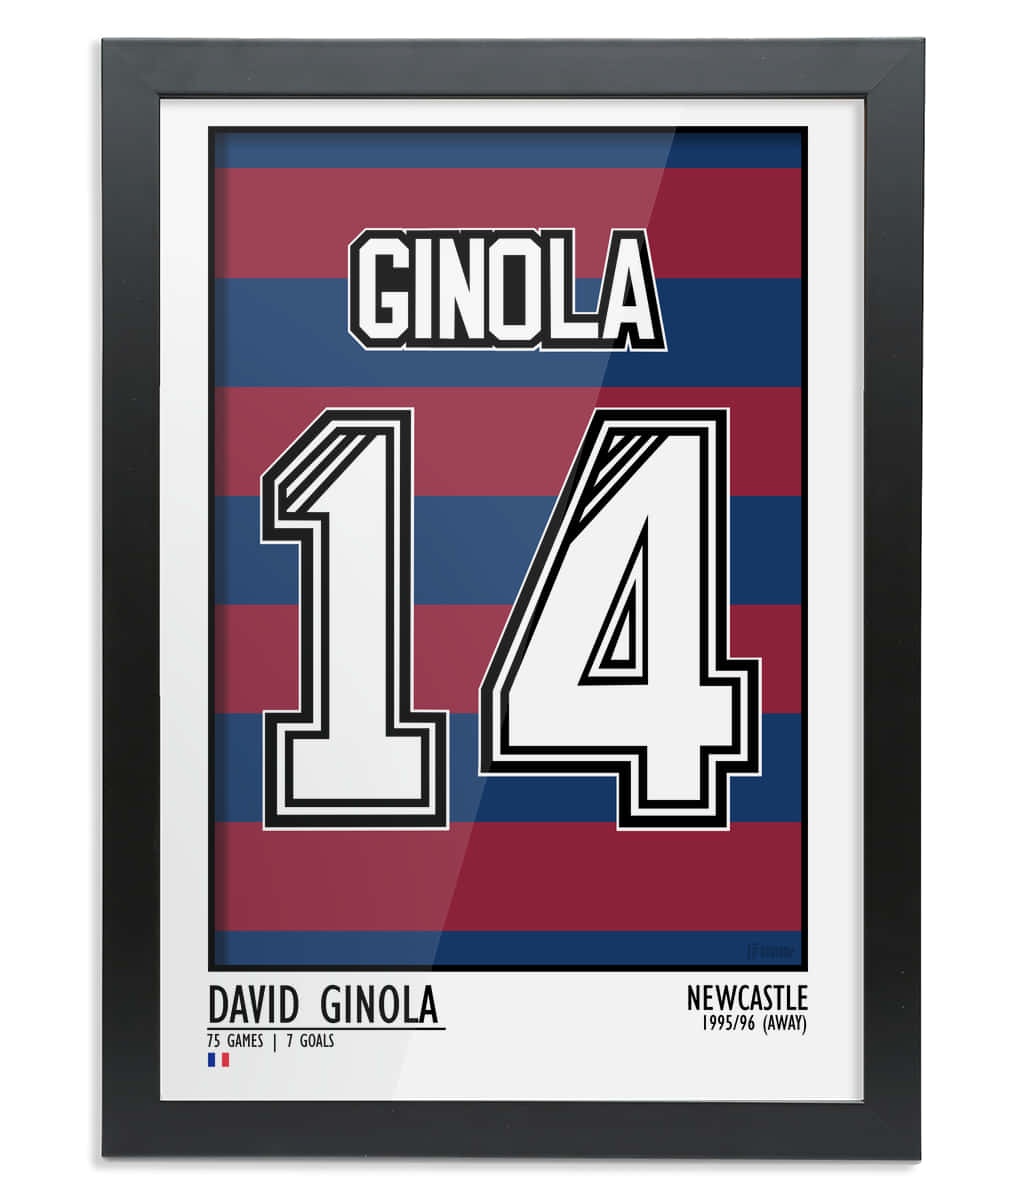 David Ginola 14 Football Player Wallpaper